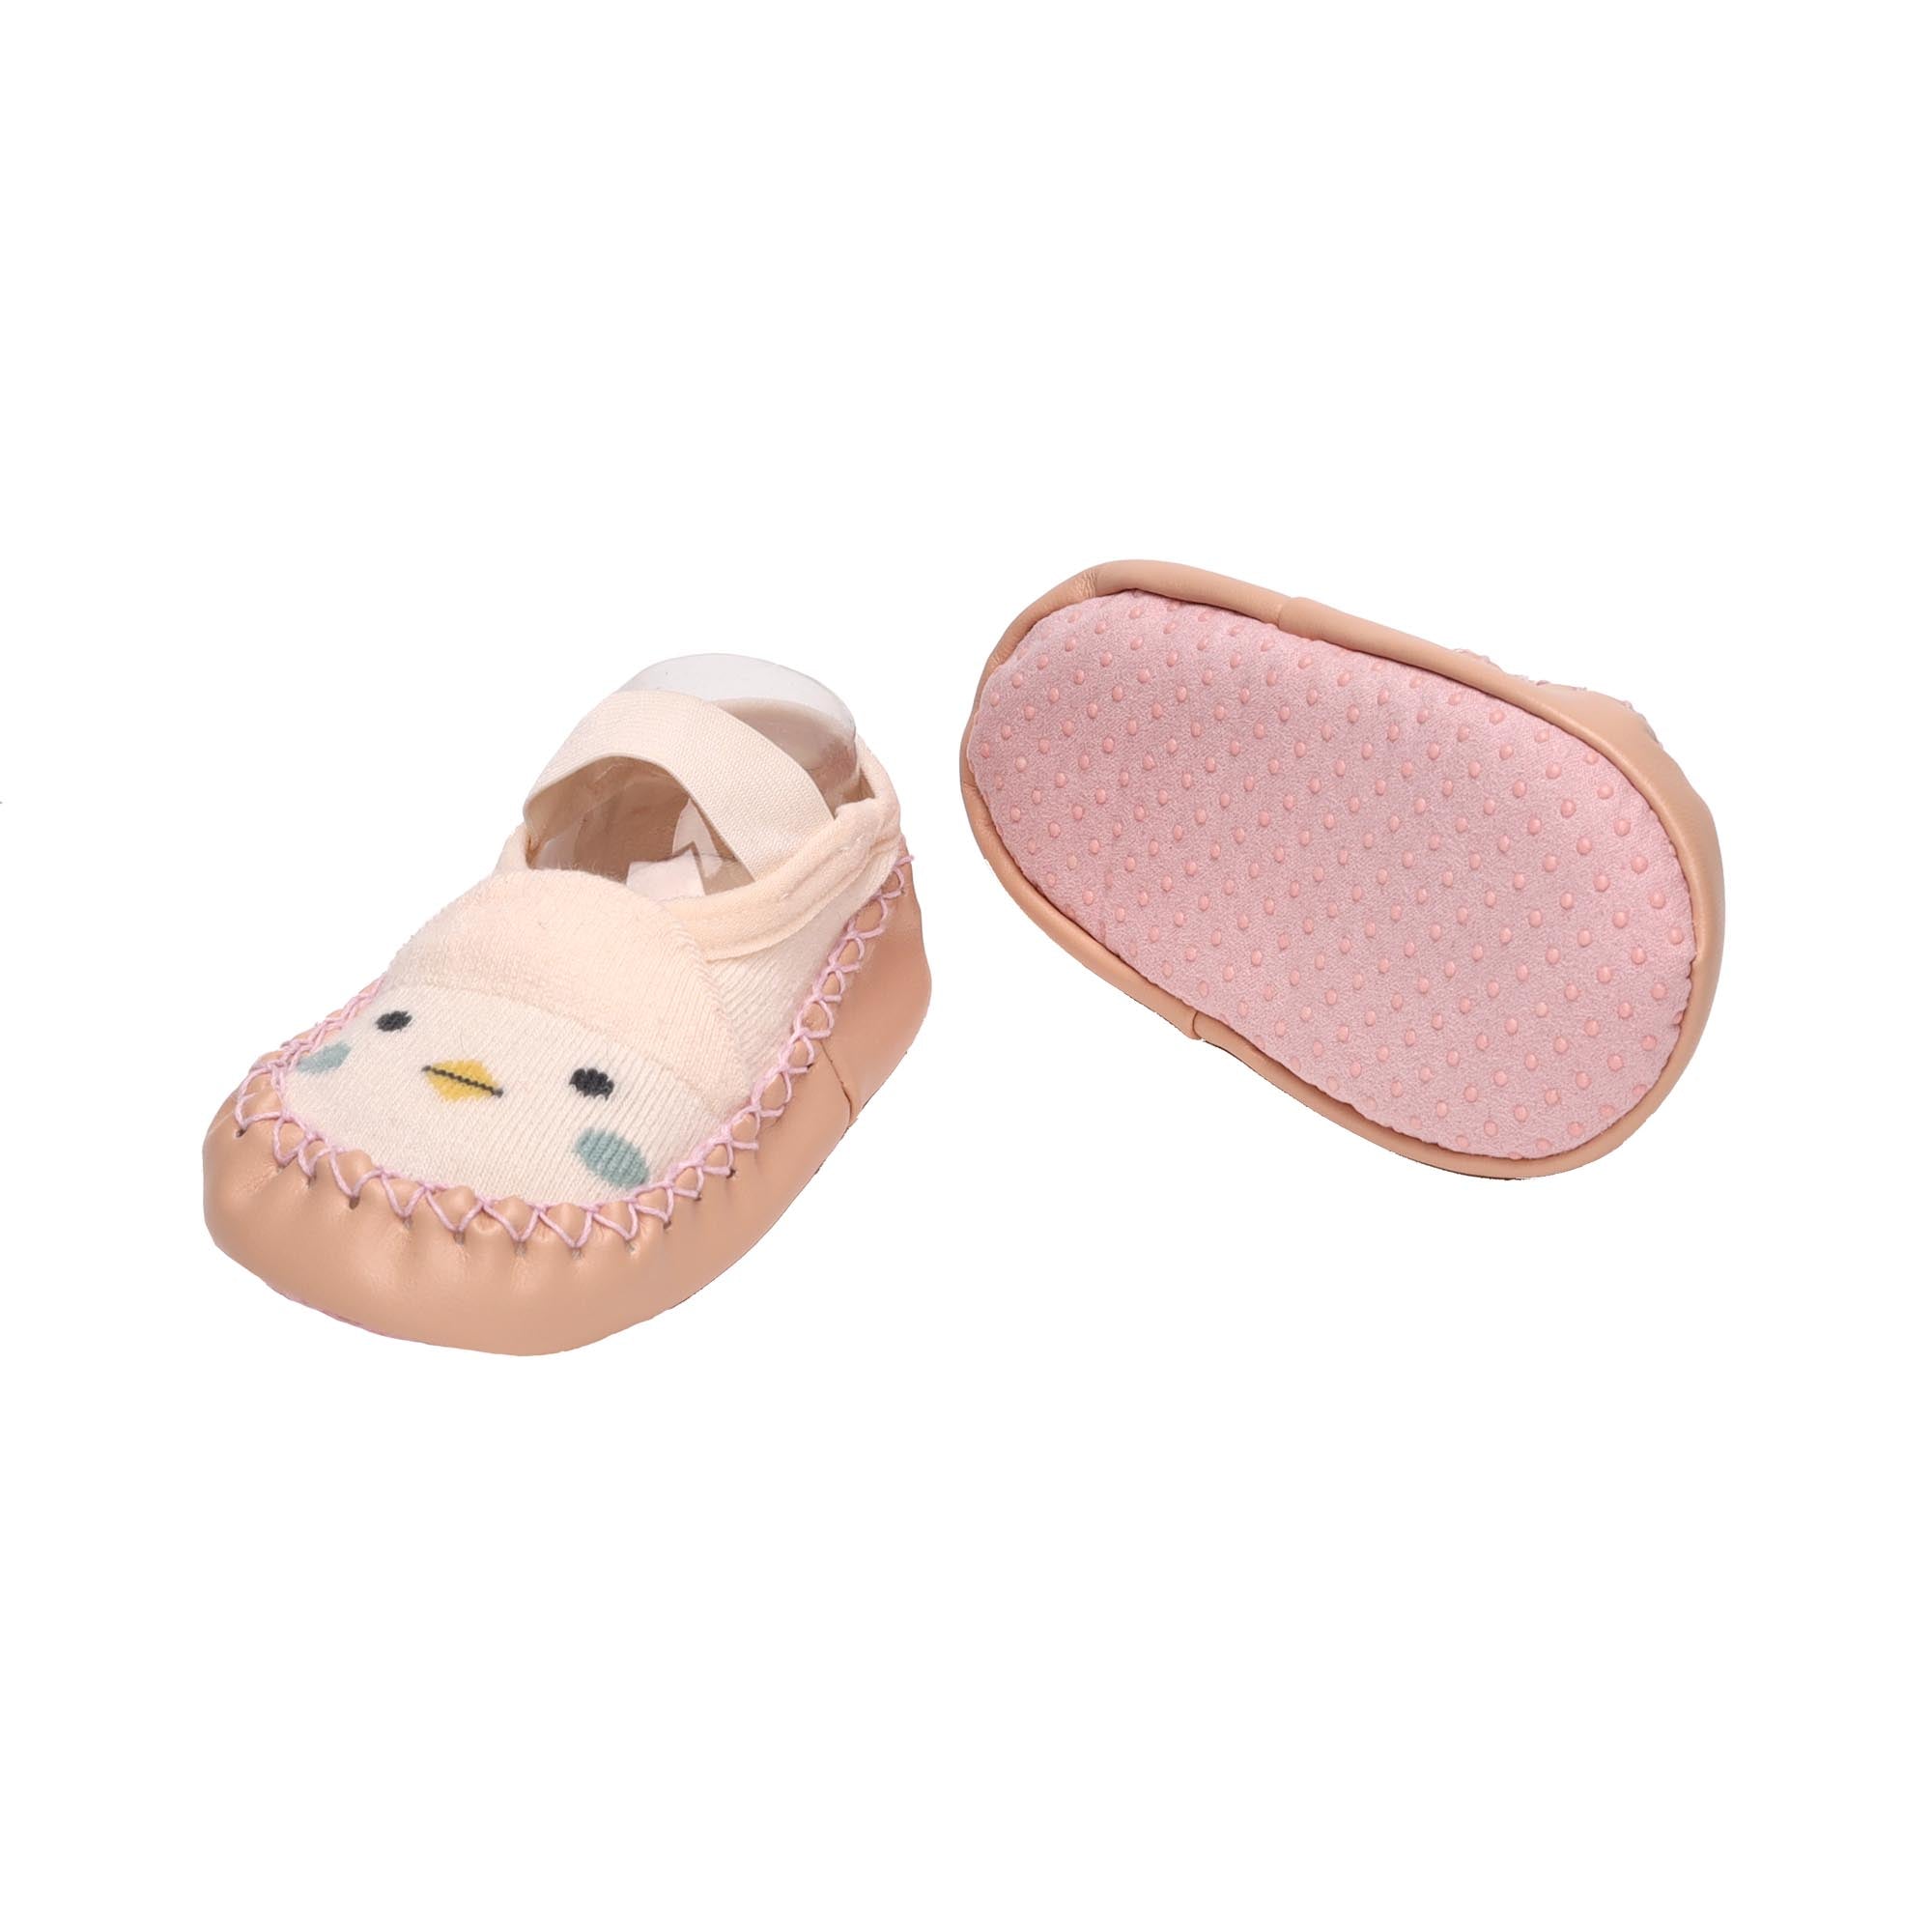 Kicks & Crawl - Happy Feet Pink & Peach Slip On Booties - 2 Pack